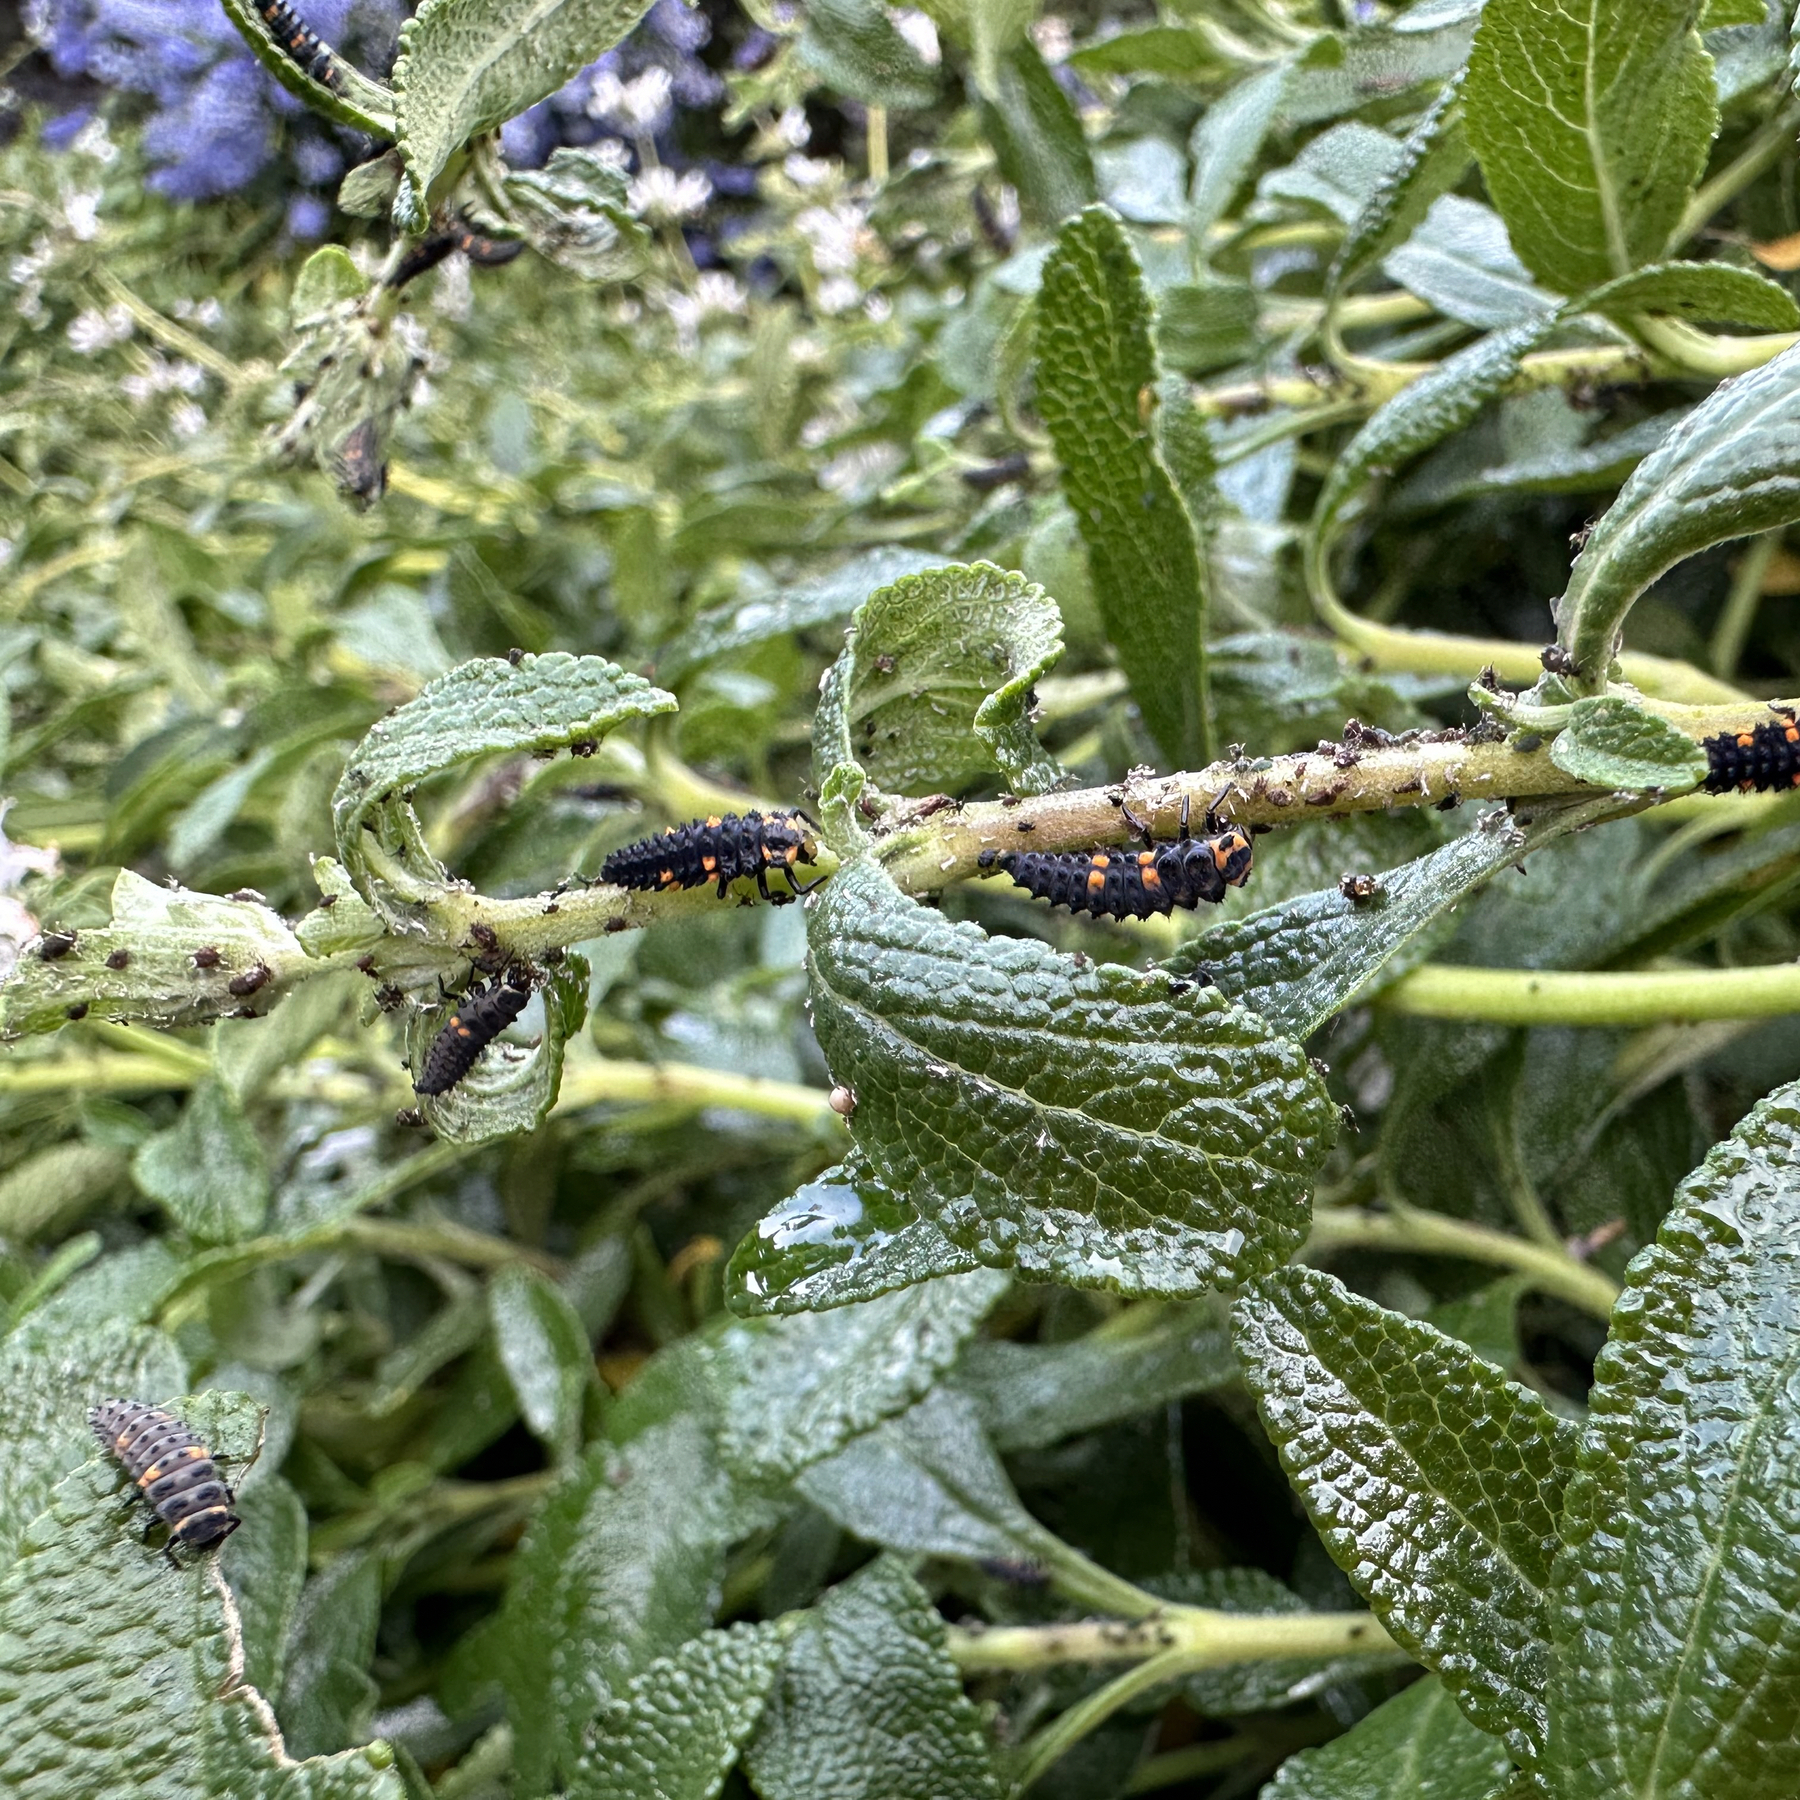 Several ladybug larvae, kind of a rectangular bug with mostly black with orange stripes, are gorging on aphids on a sage.